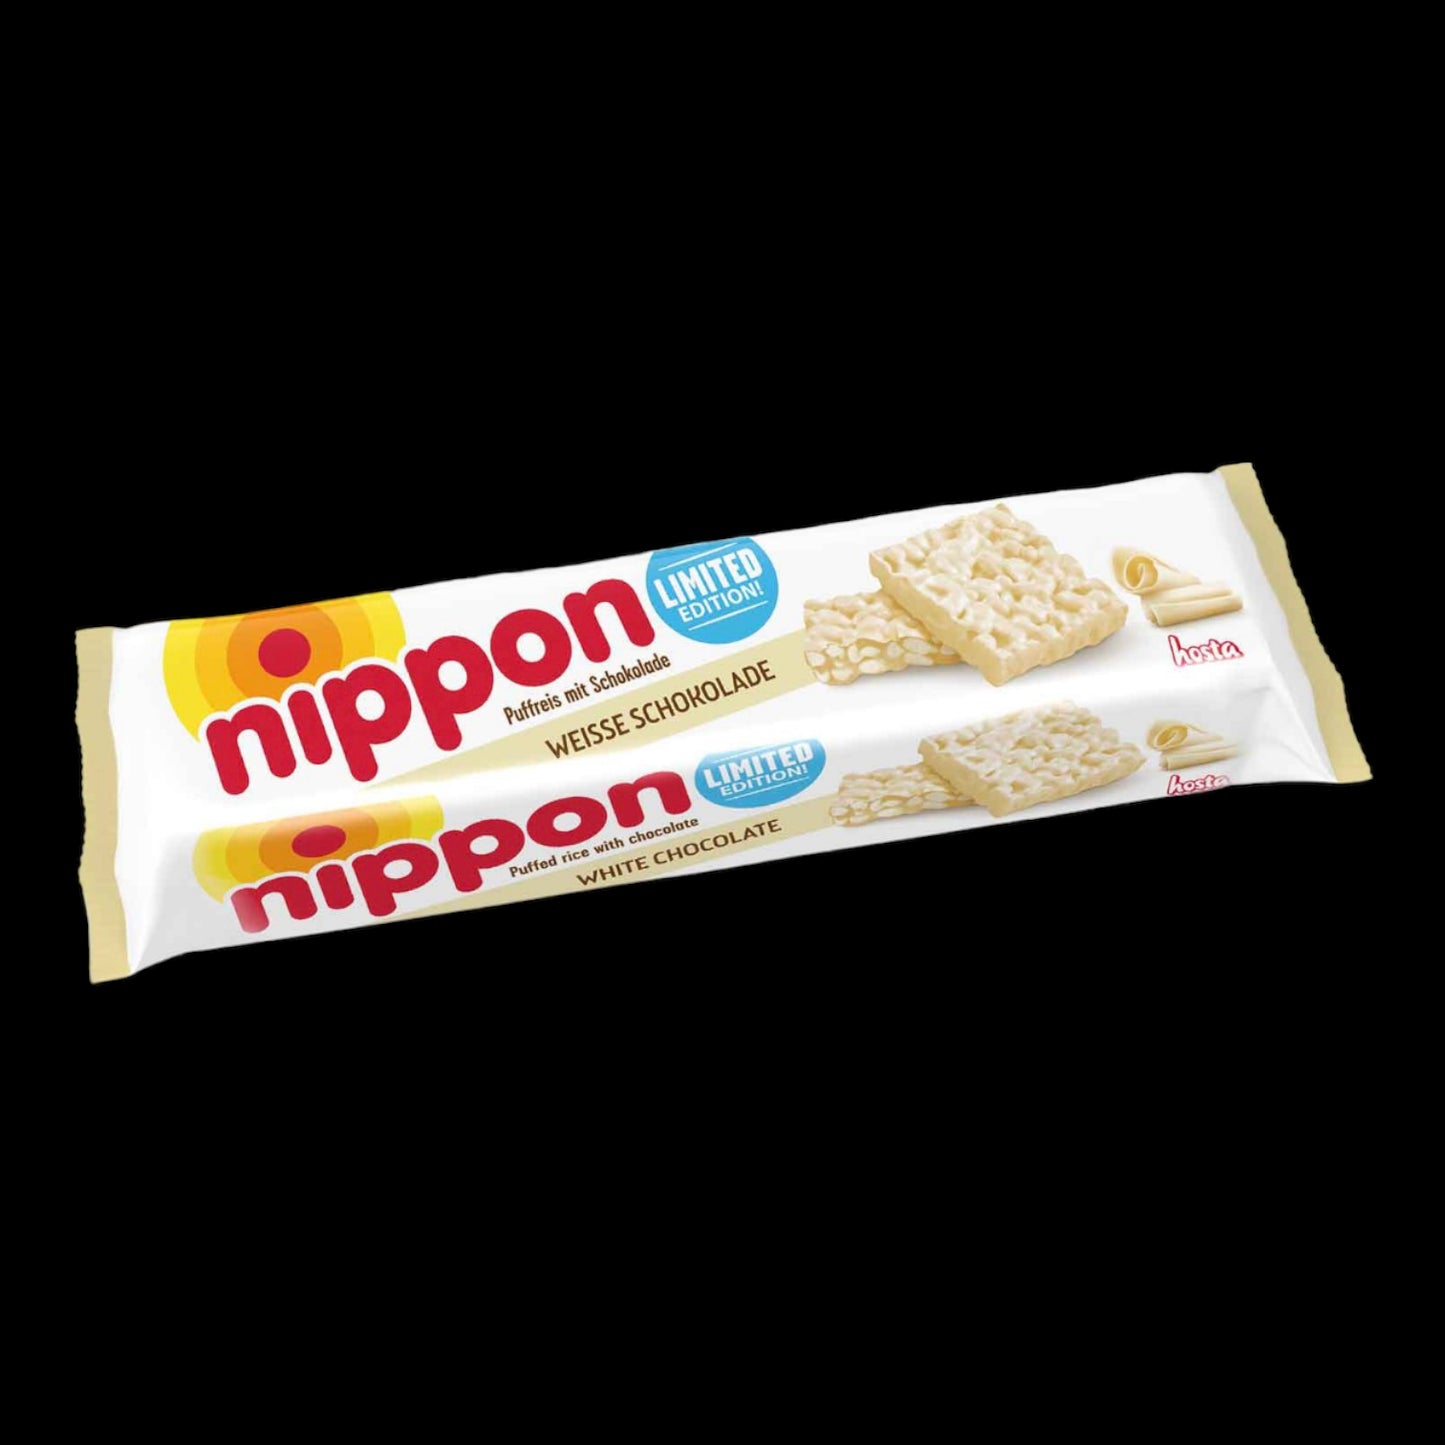 Nippon weiße Schokolade 200g Limited Edition